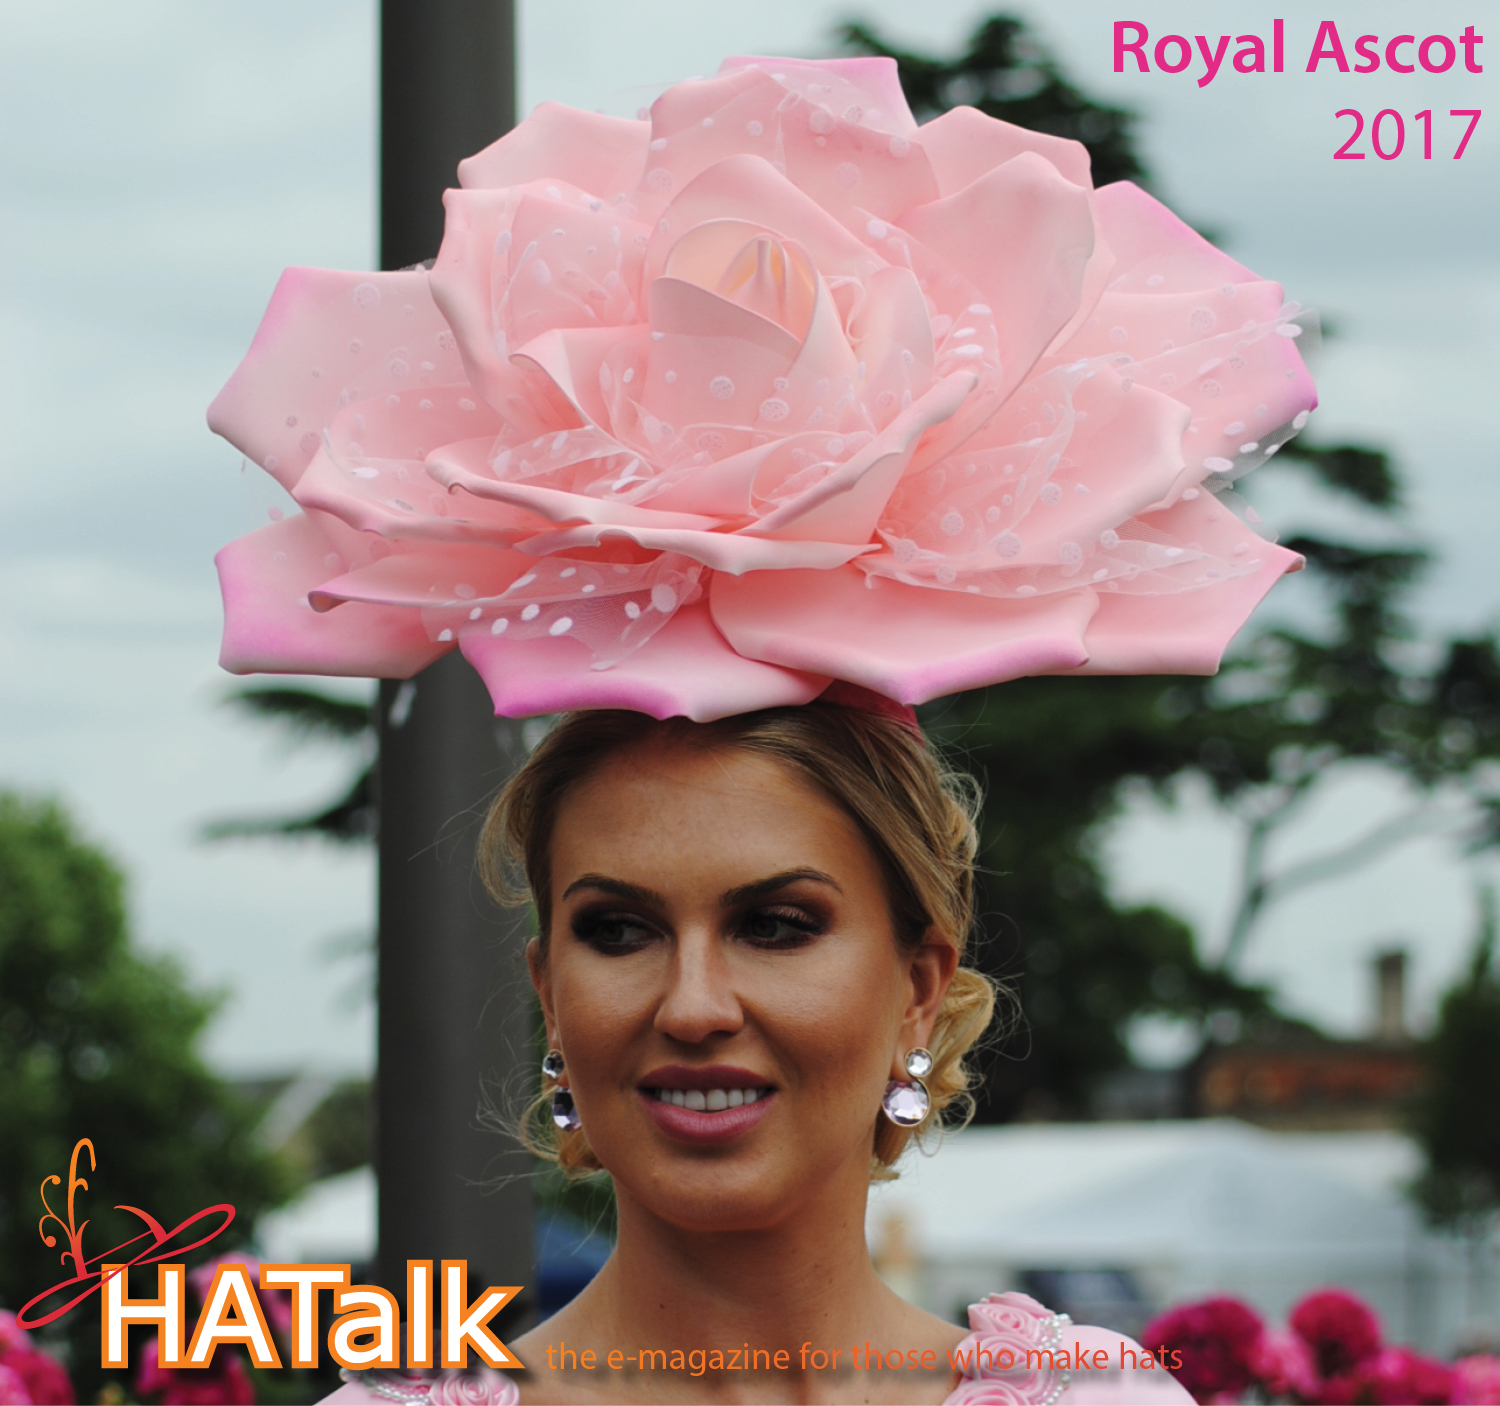 Royal Ascot 2017 HATalk Special Edition